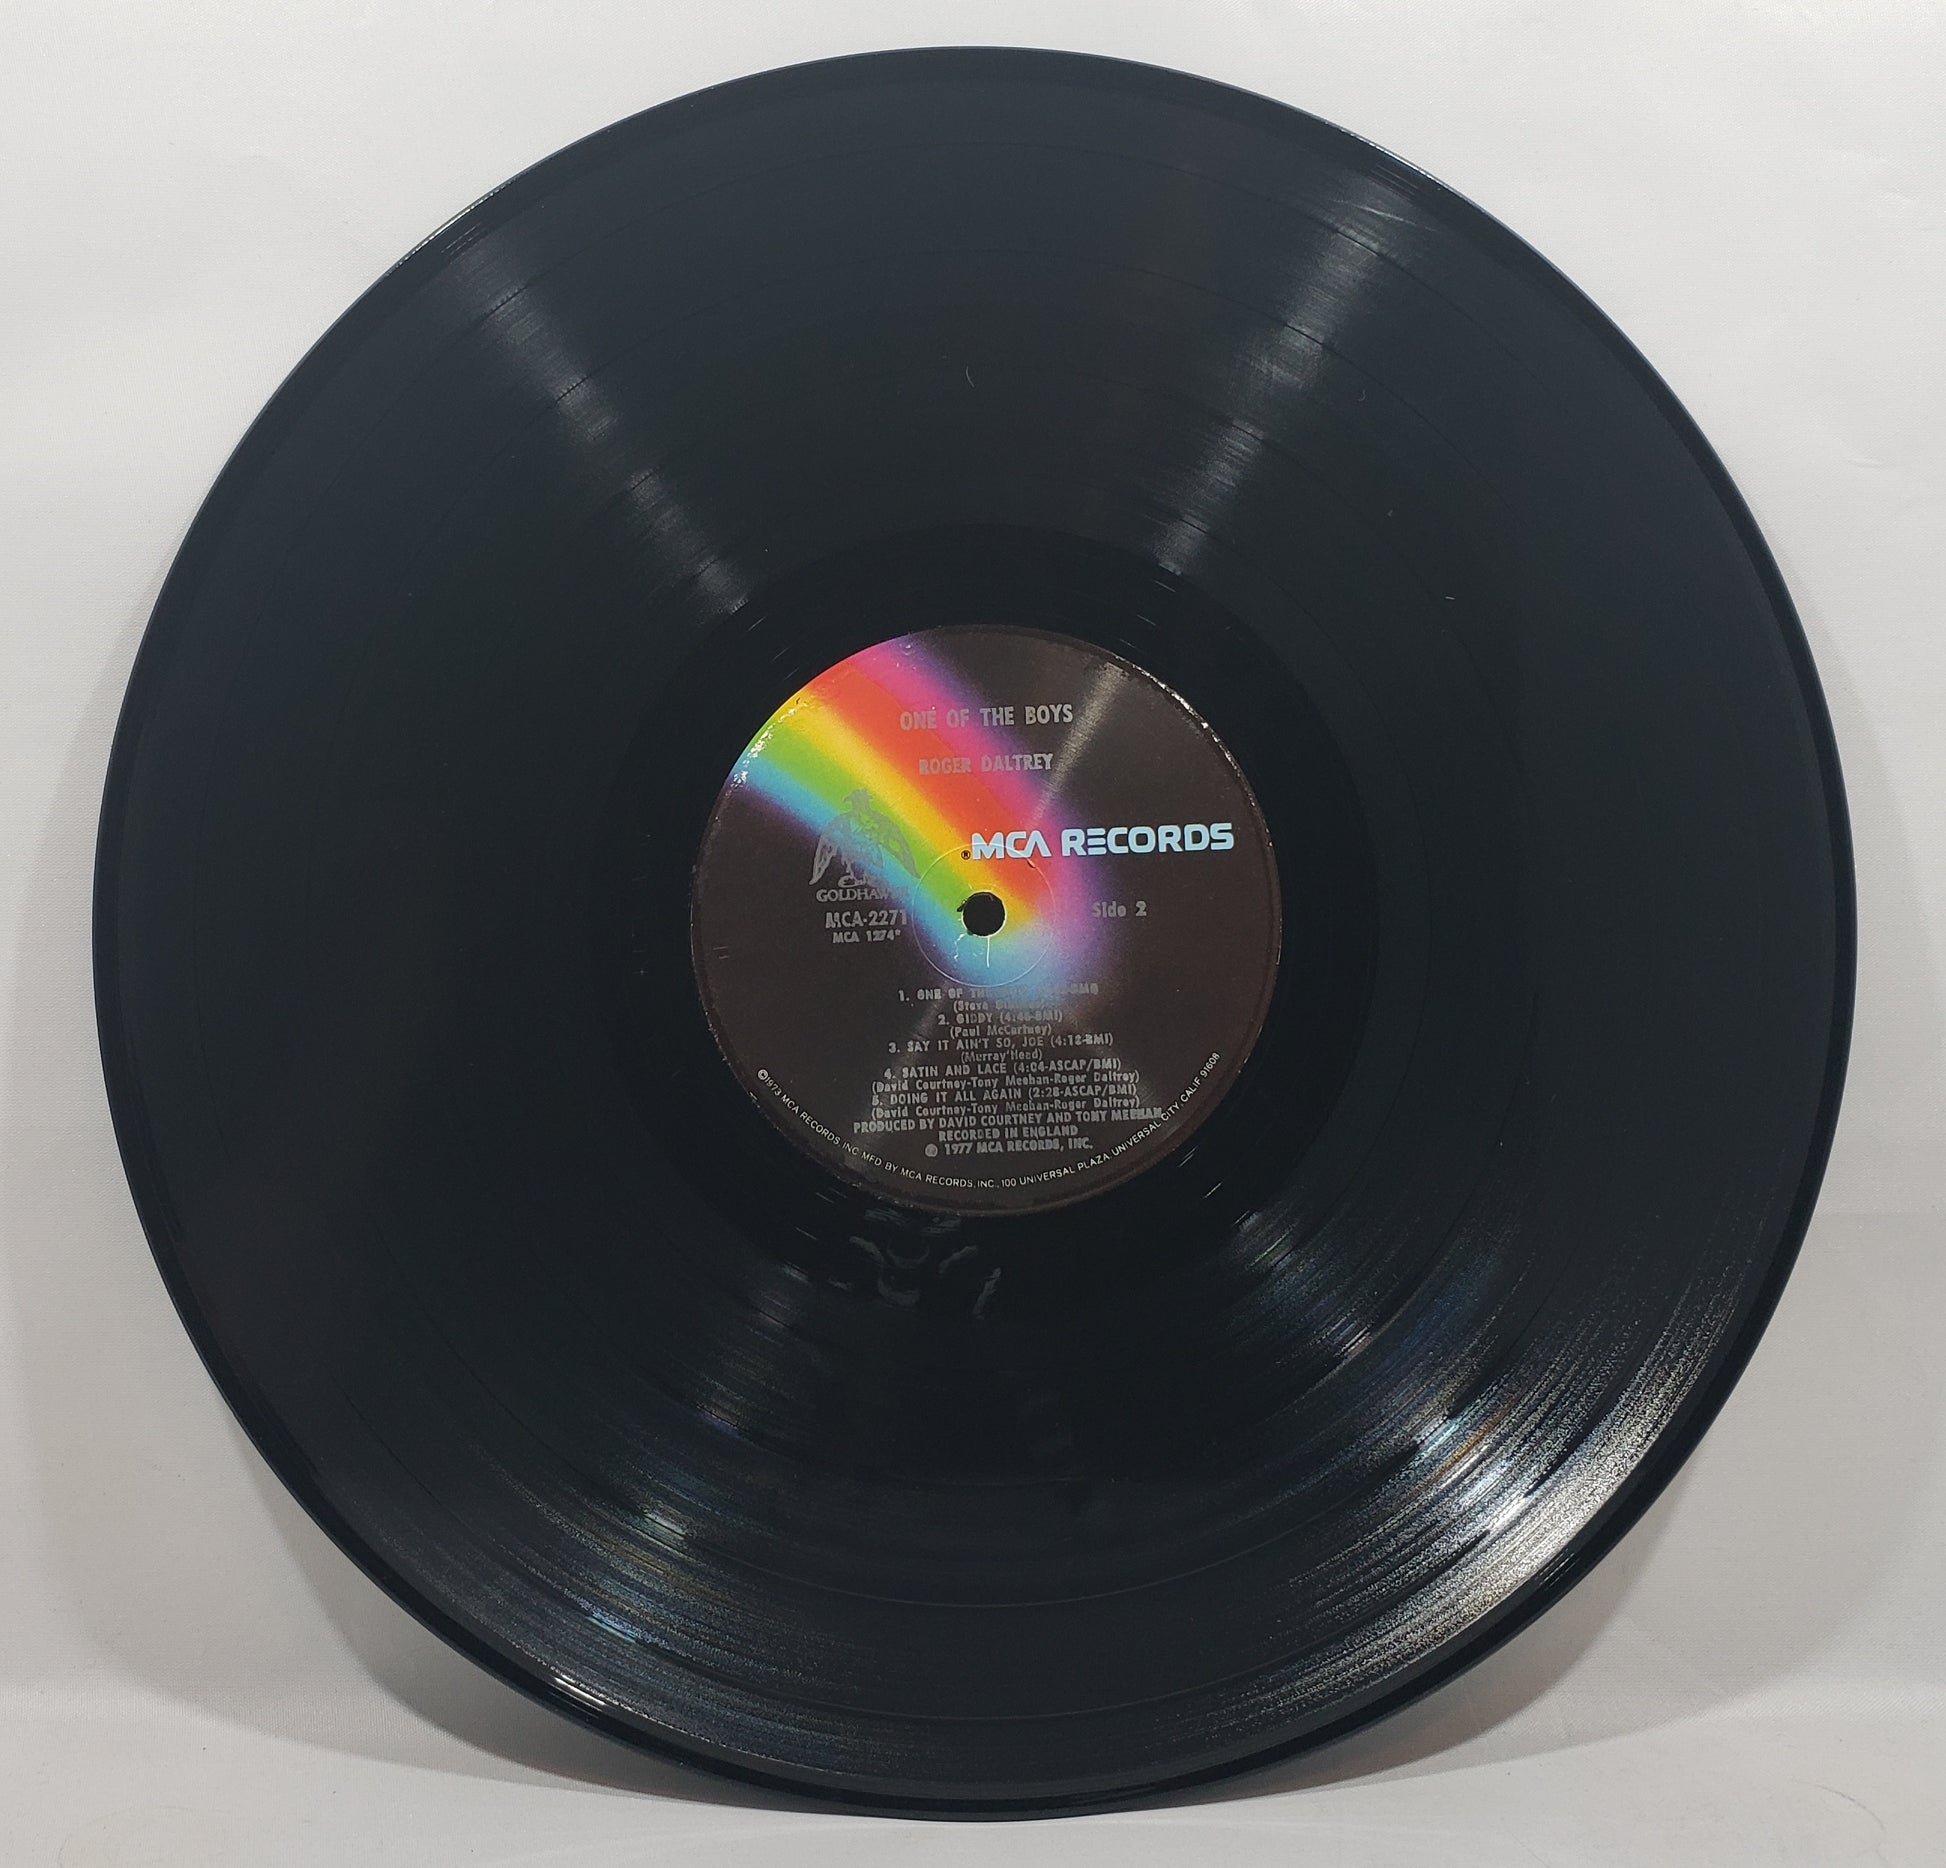 Roger Daltrey - One of the Boys [1977 Gloversville] [Used Vinyl Record LP]